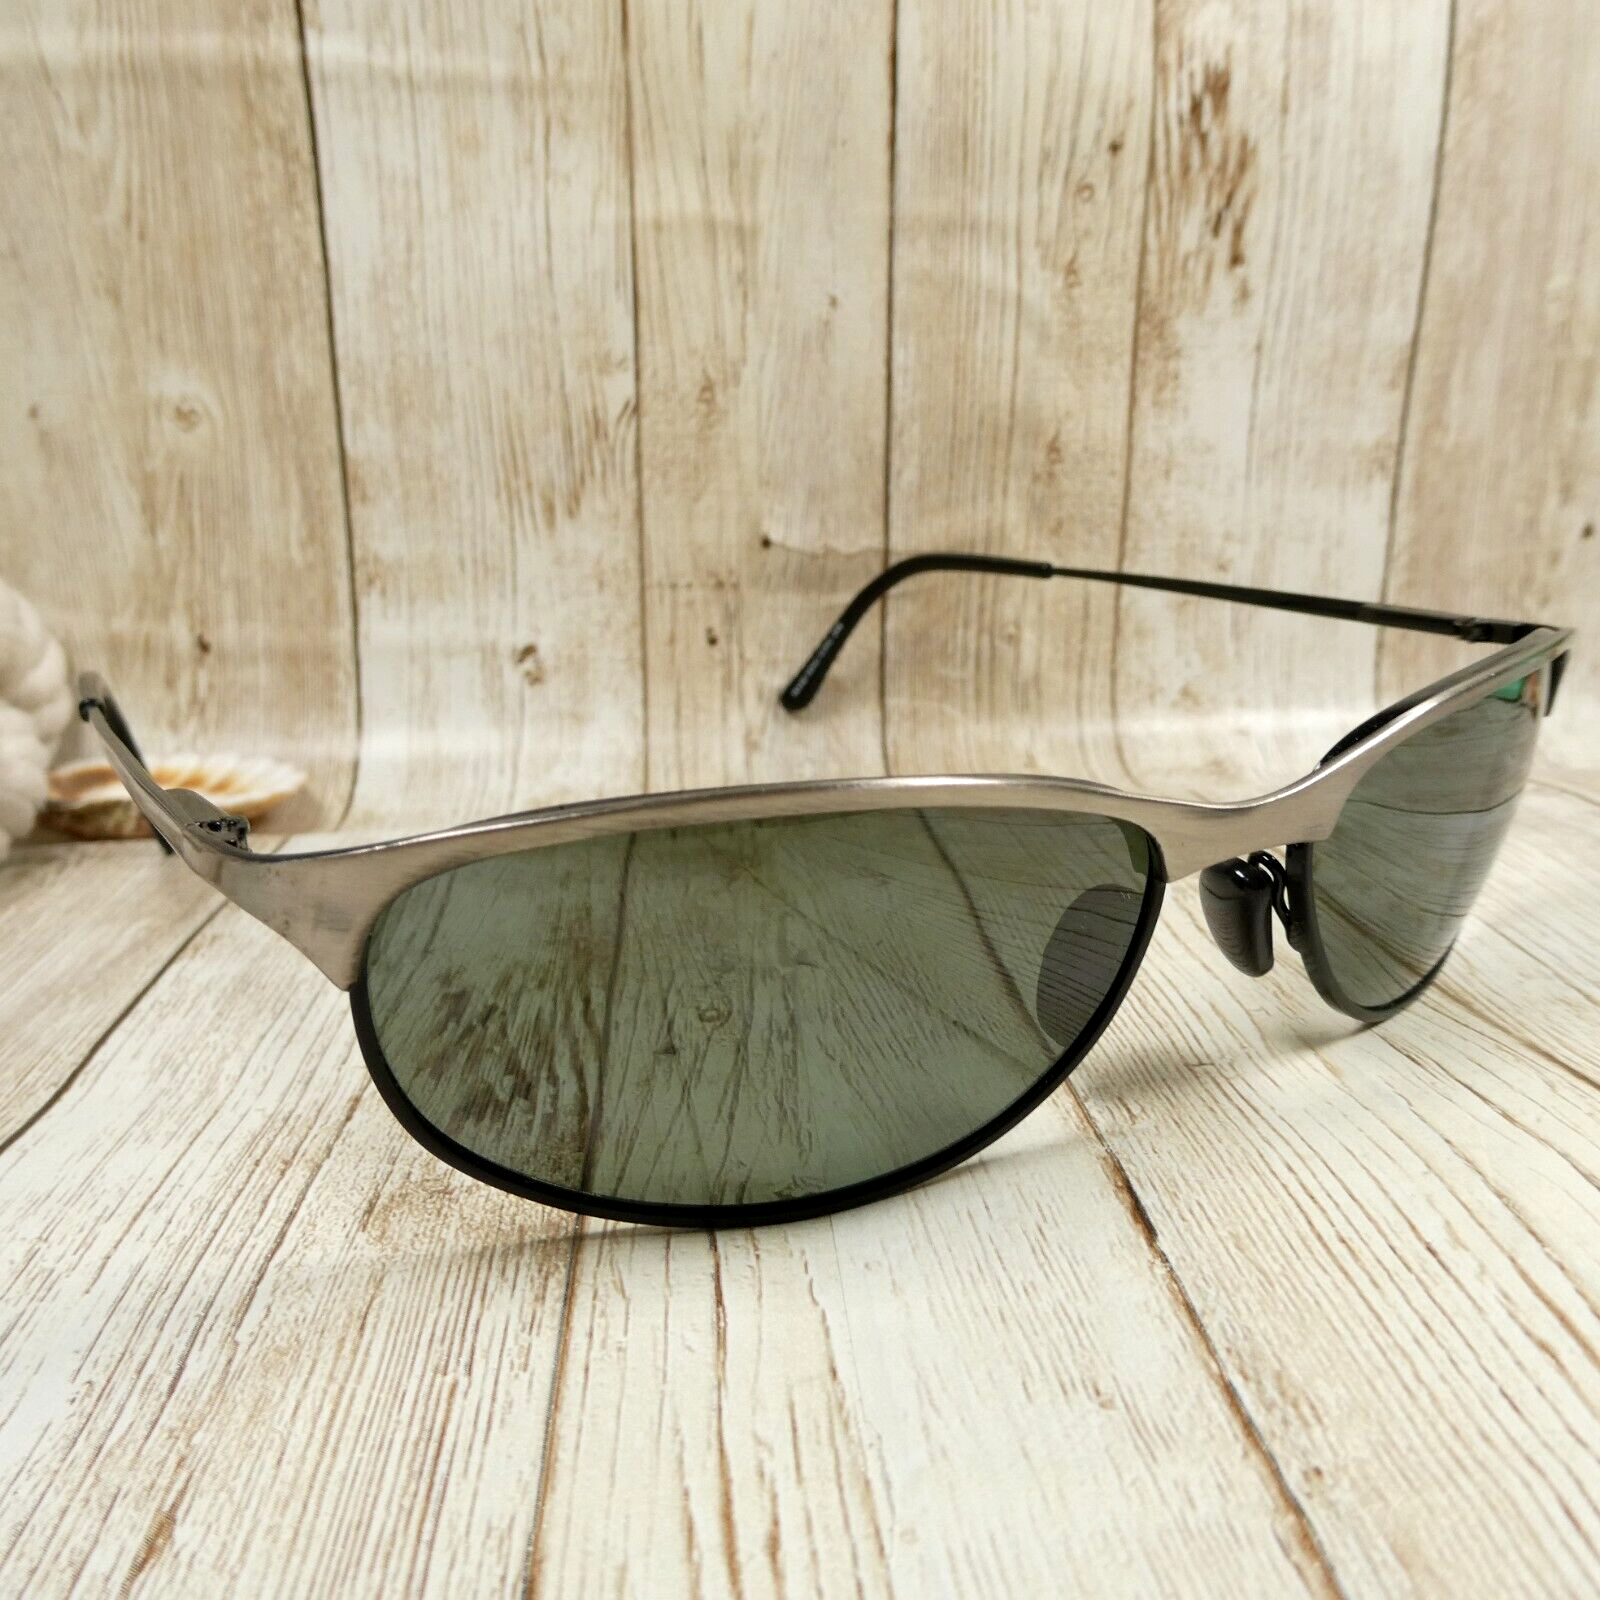 Sperry Gunmetal Black Polarized Wrap Sunglasses - Defender - Made in Hong Kong - $33.37